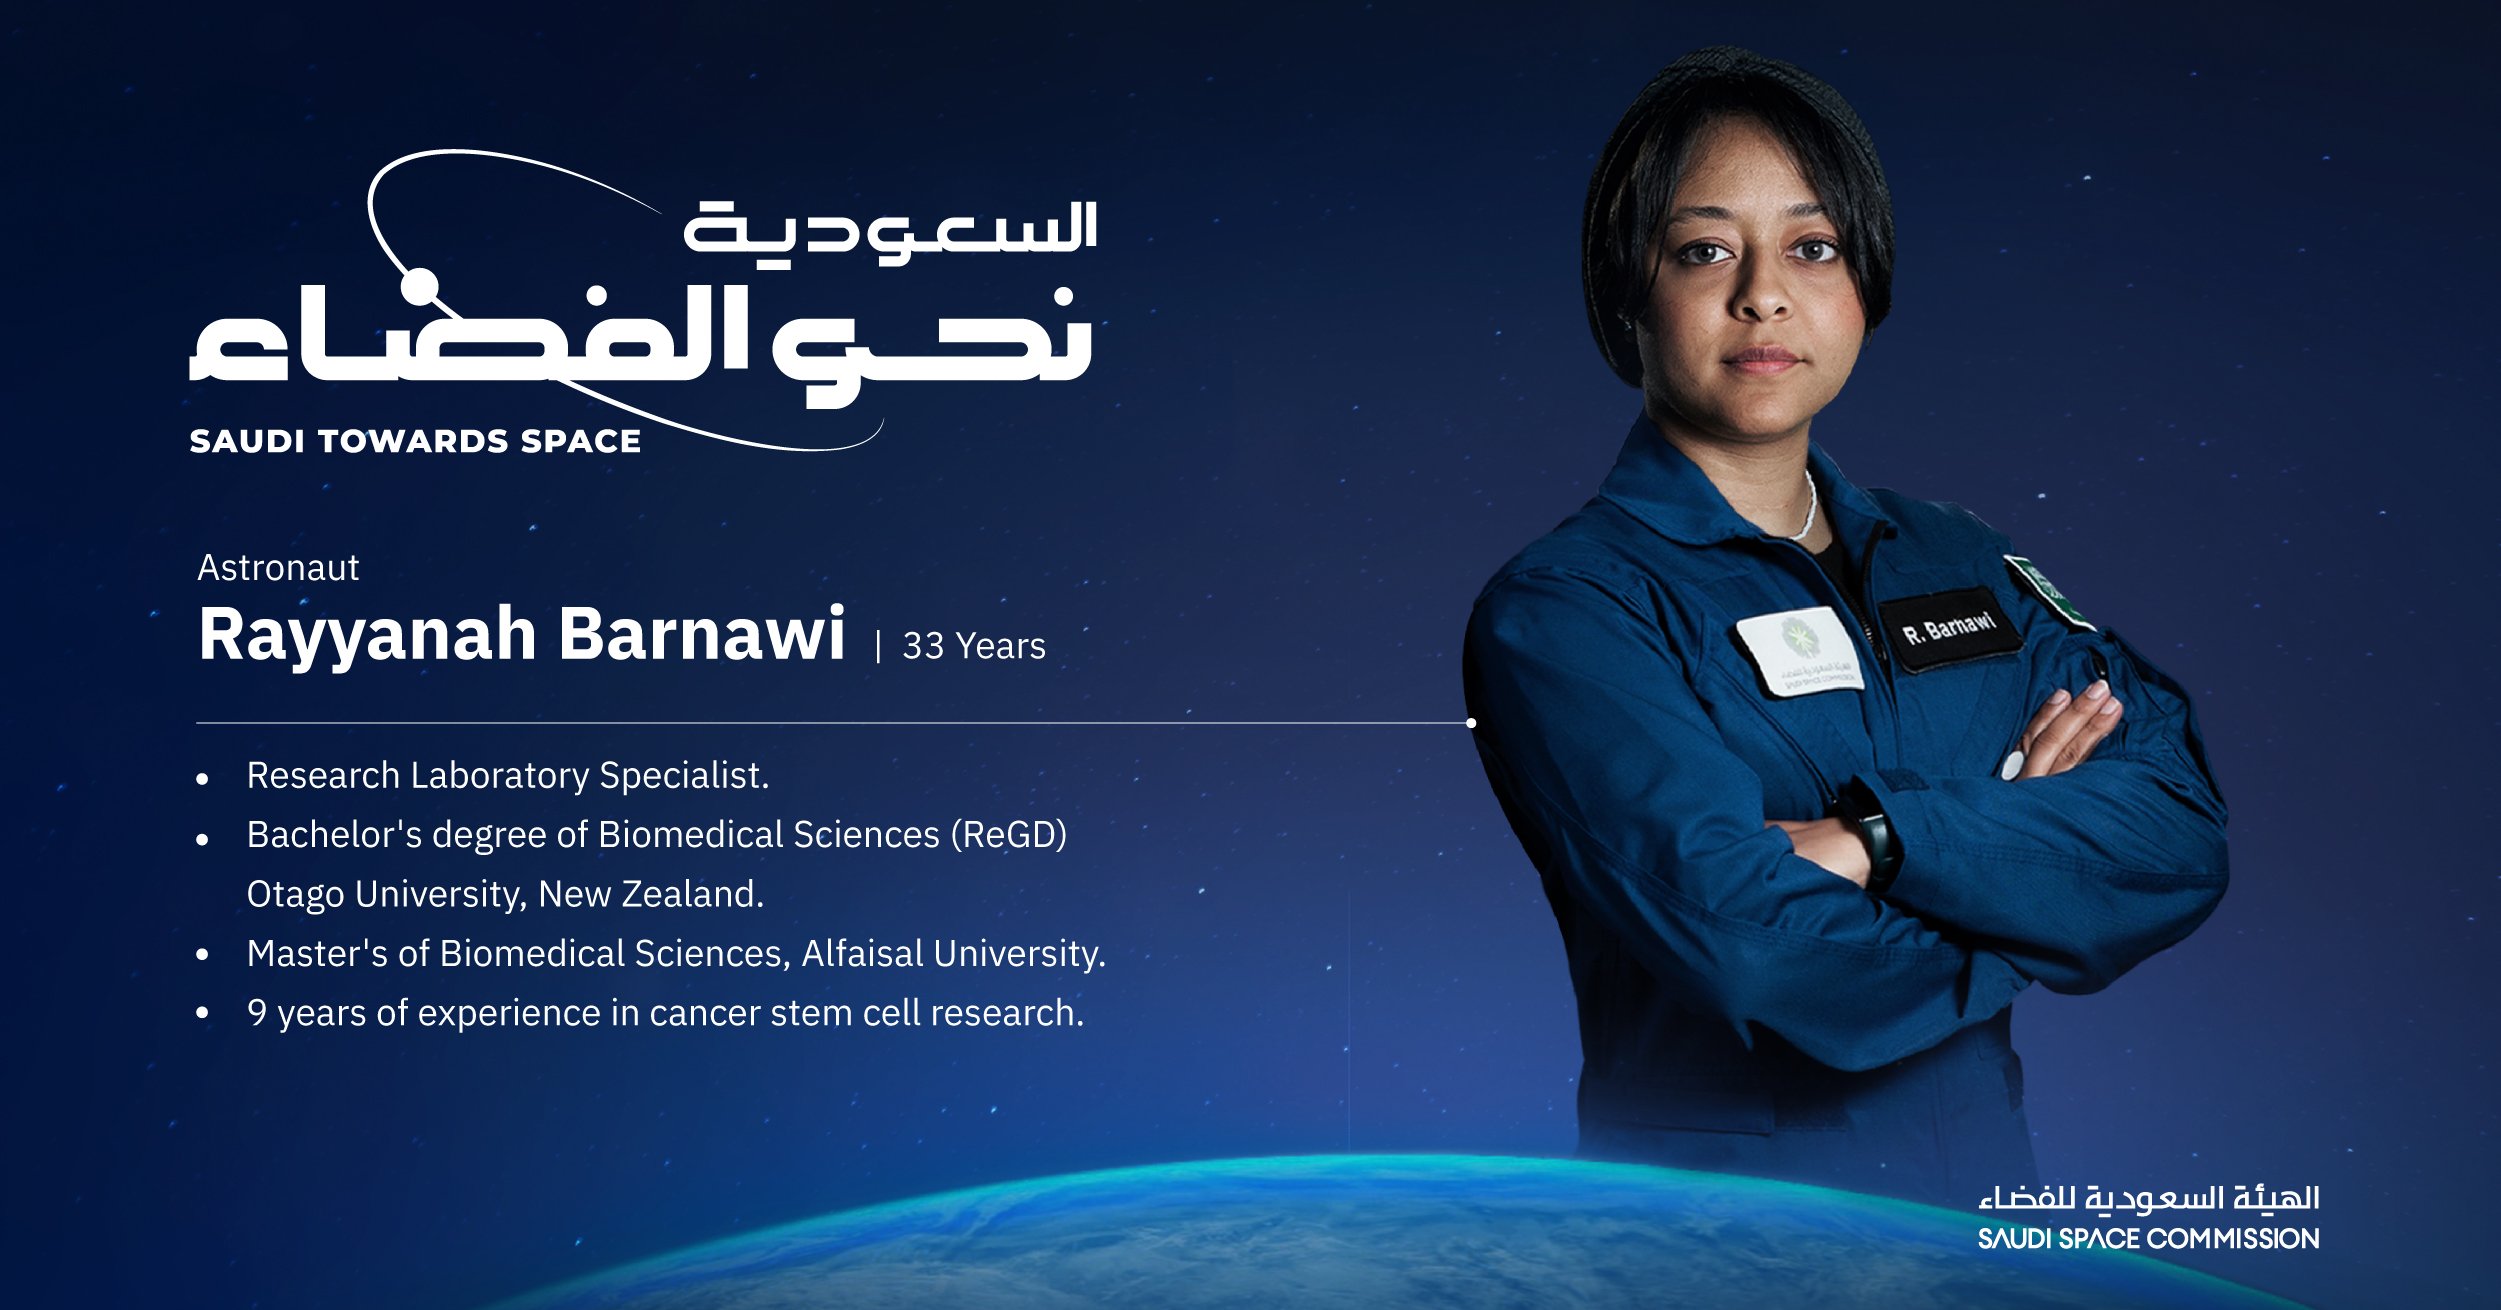 Arabia Saudita eligió a su primera mujer astronauta 